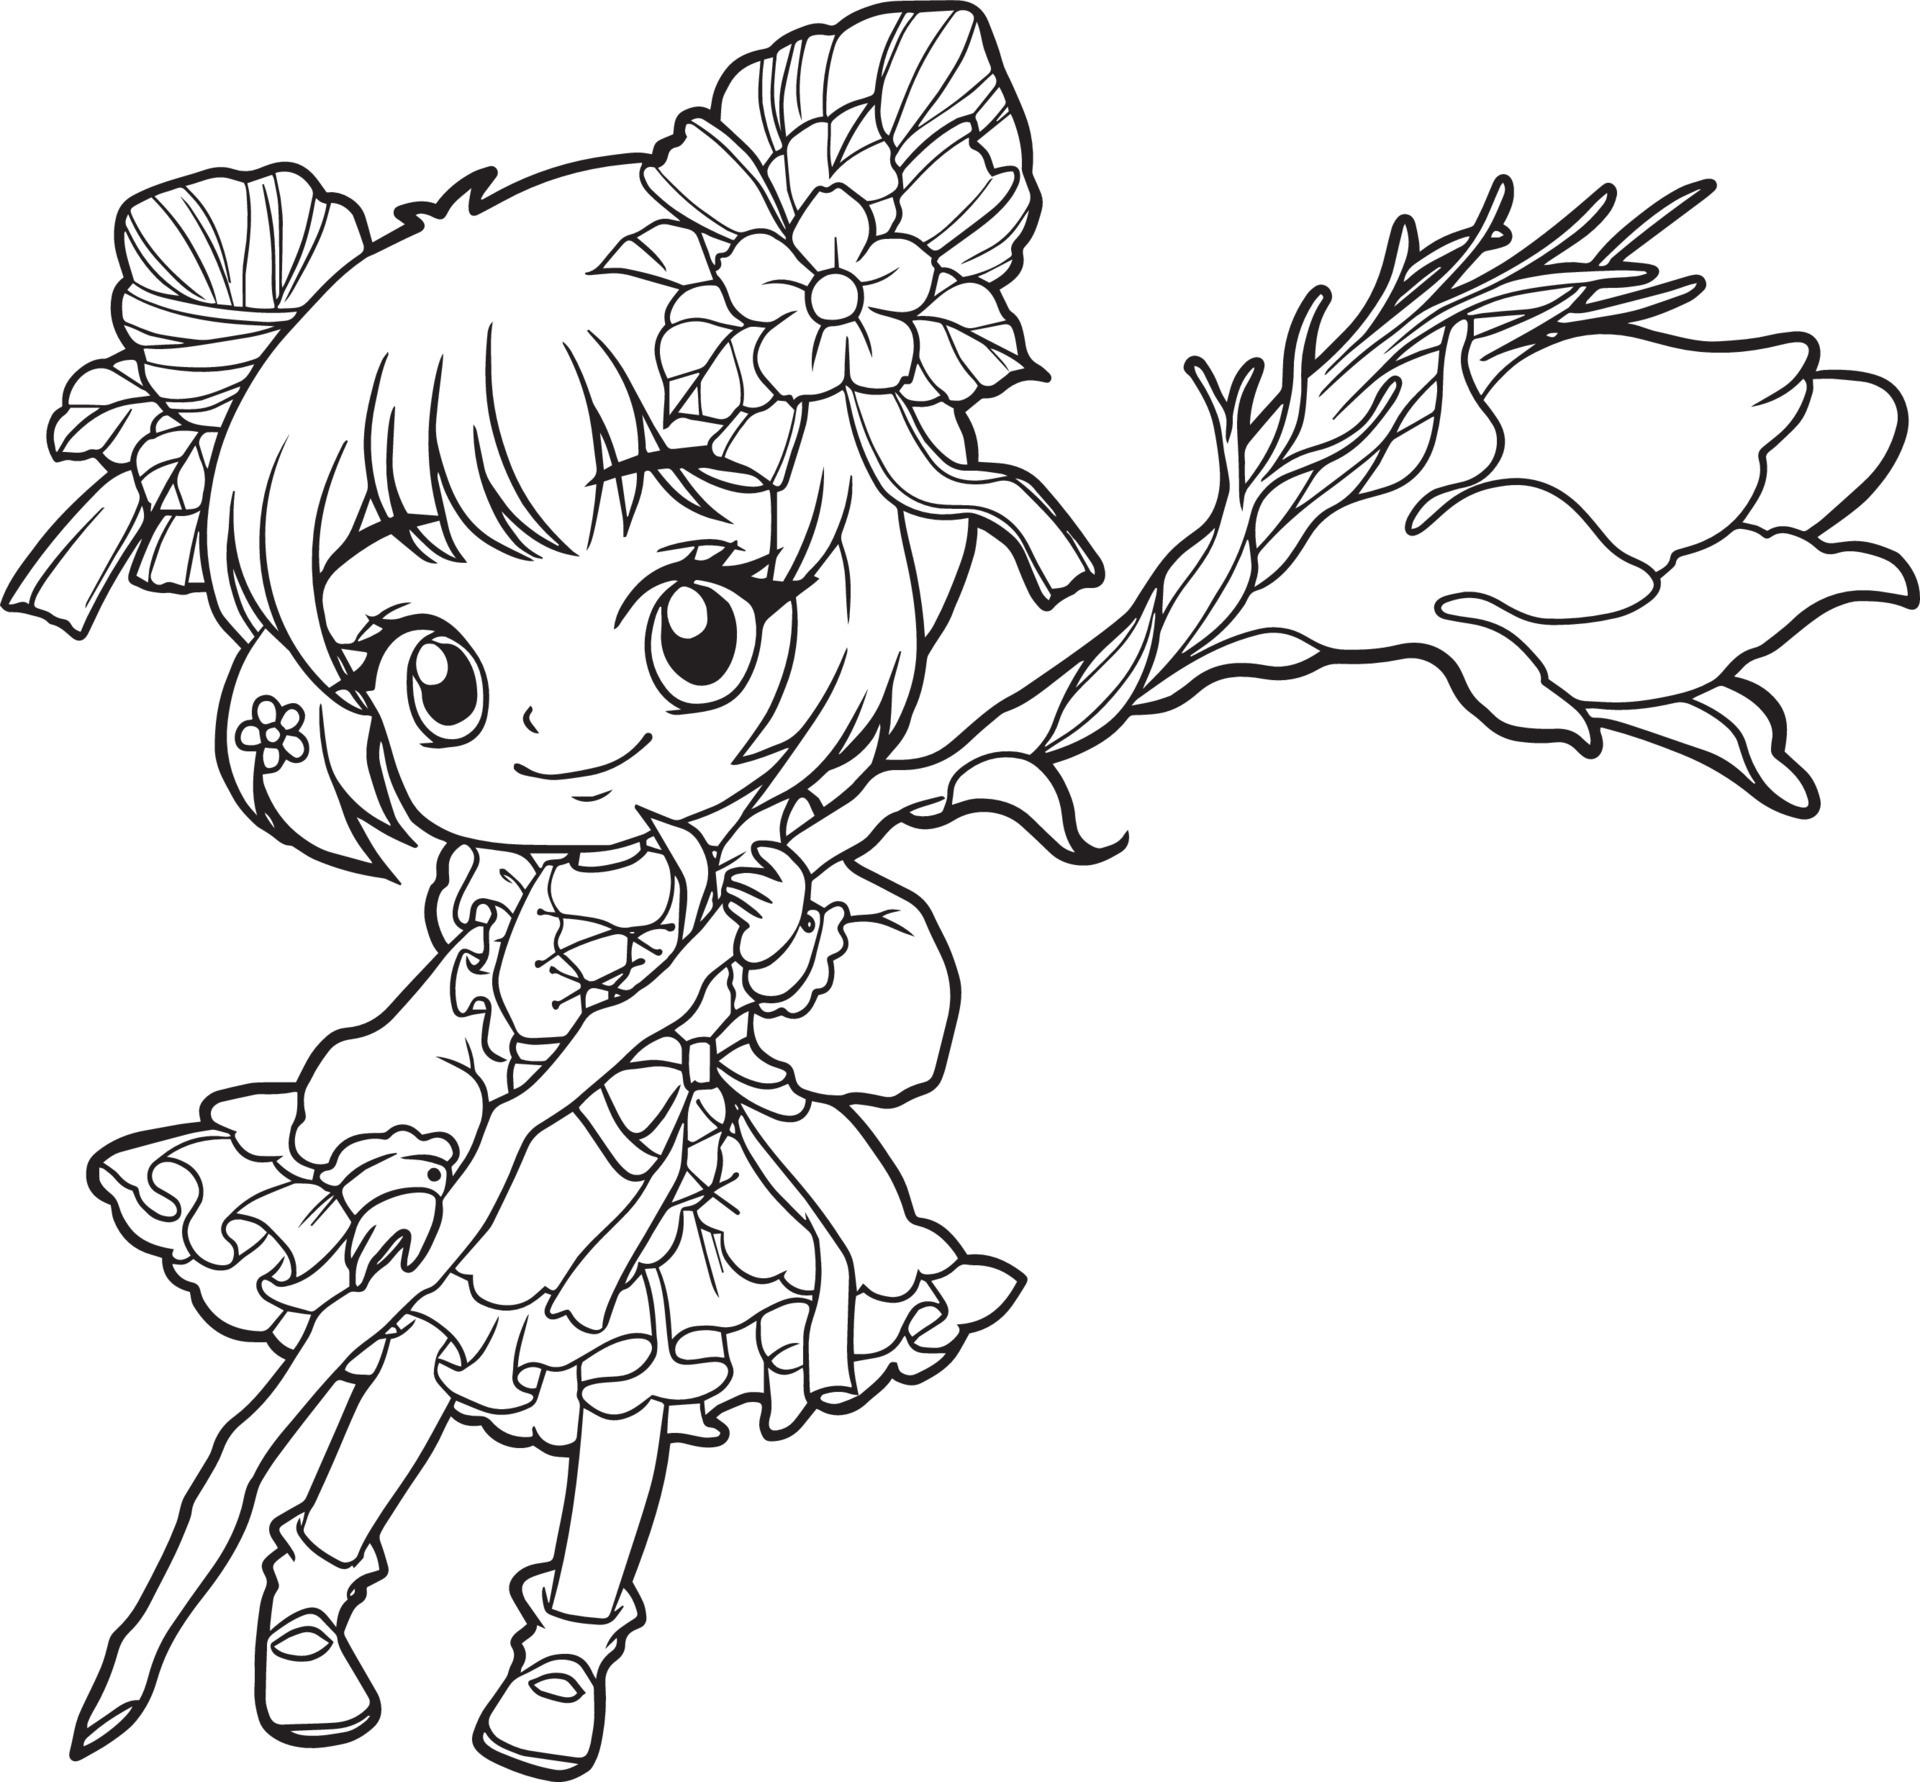 Rapariga desenhada em estilo Manga / Animado - Mangas - Coloring